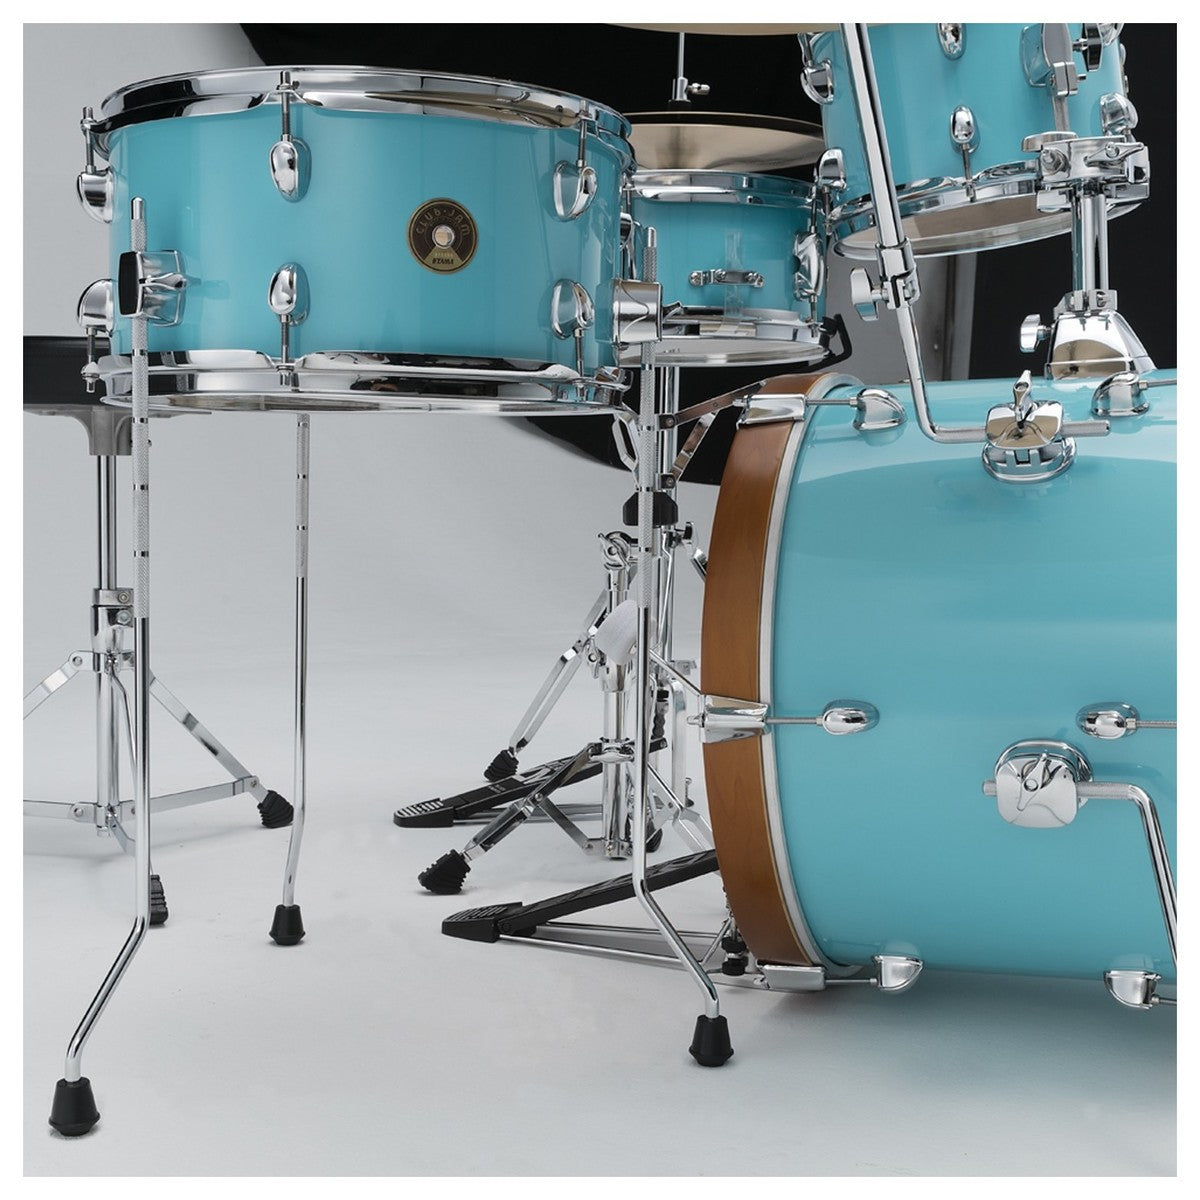 Tama Club Jam Drum Kit - Aqua Blue (with hardware)